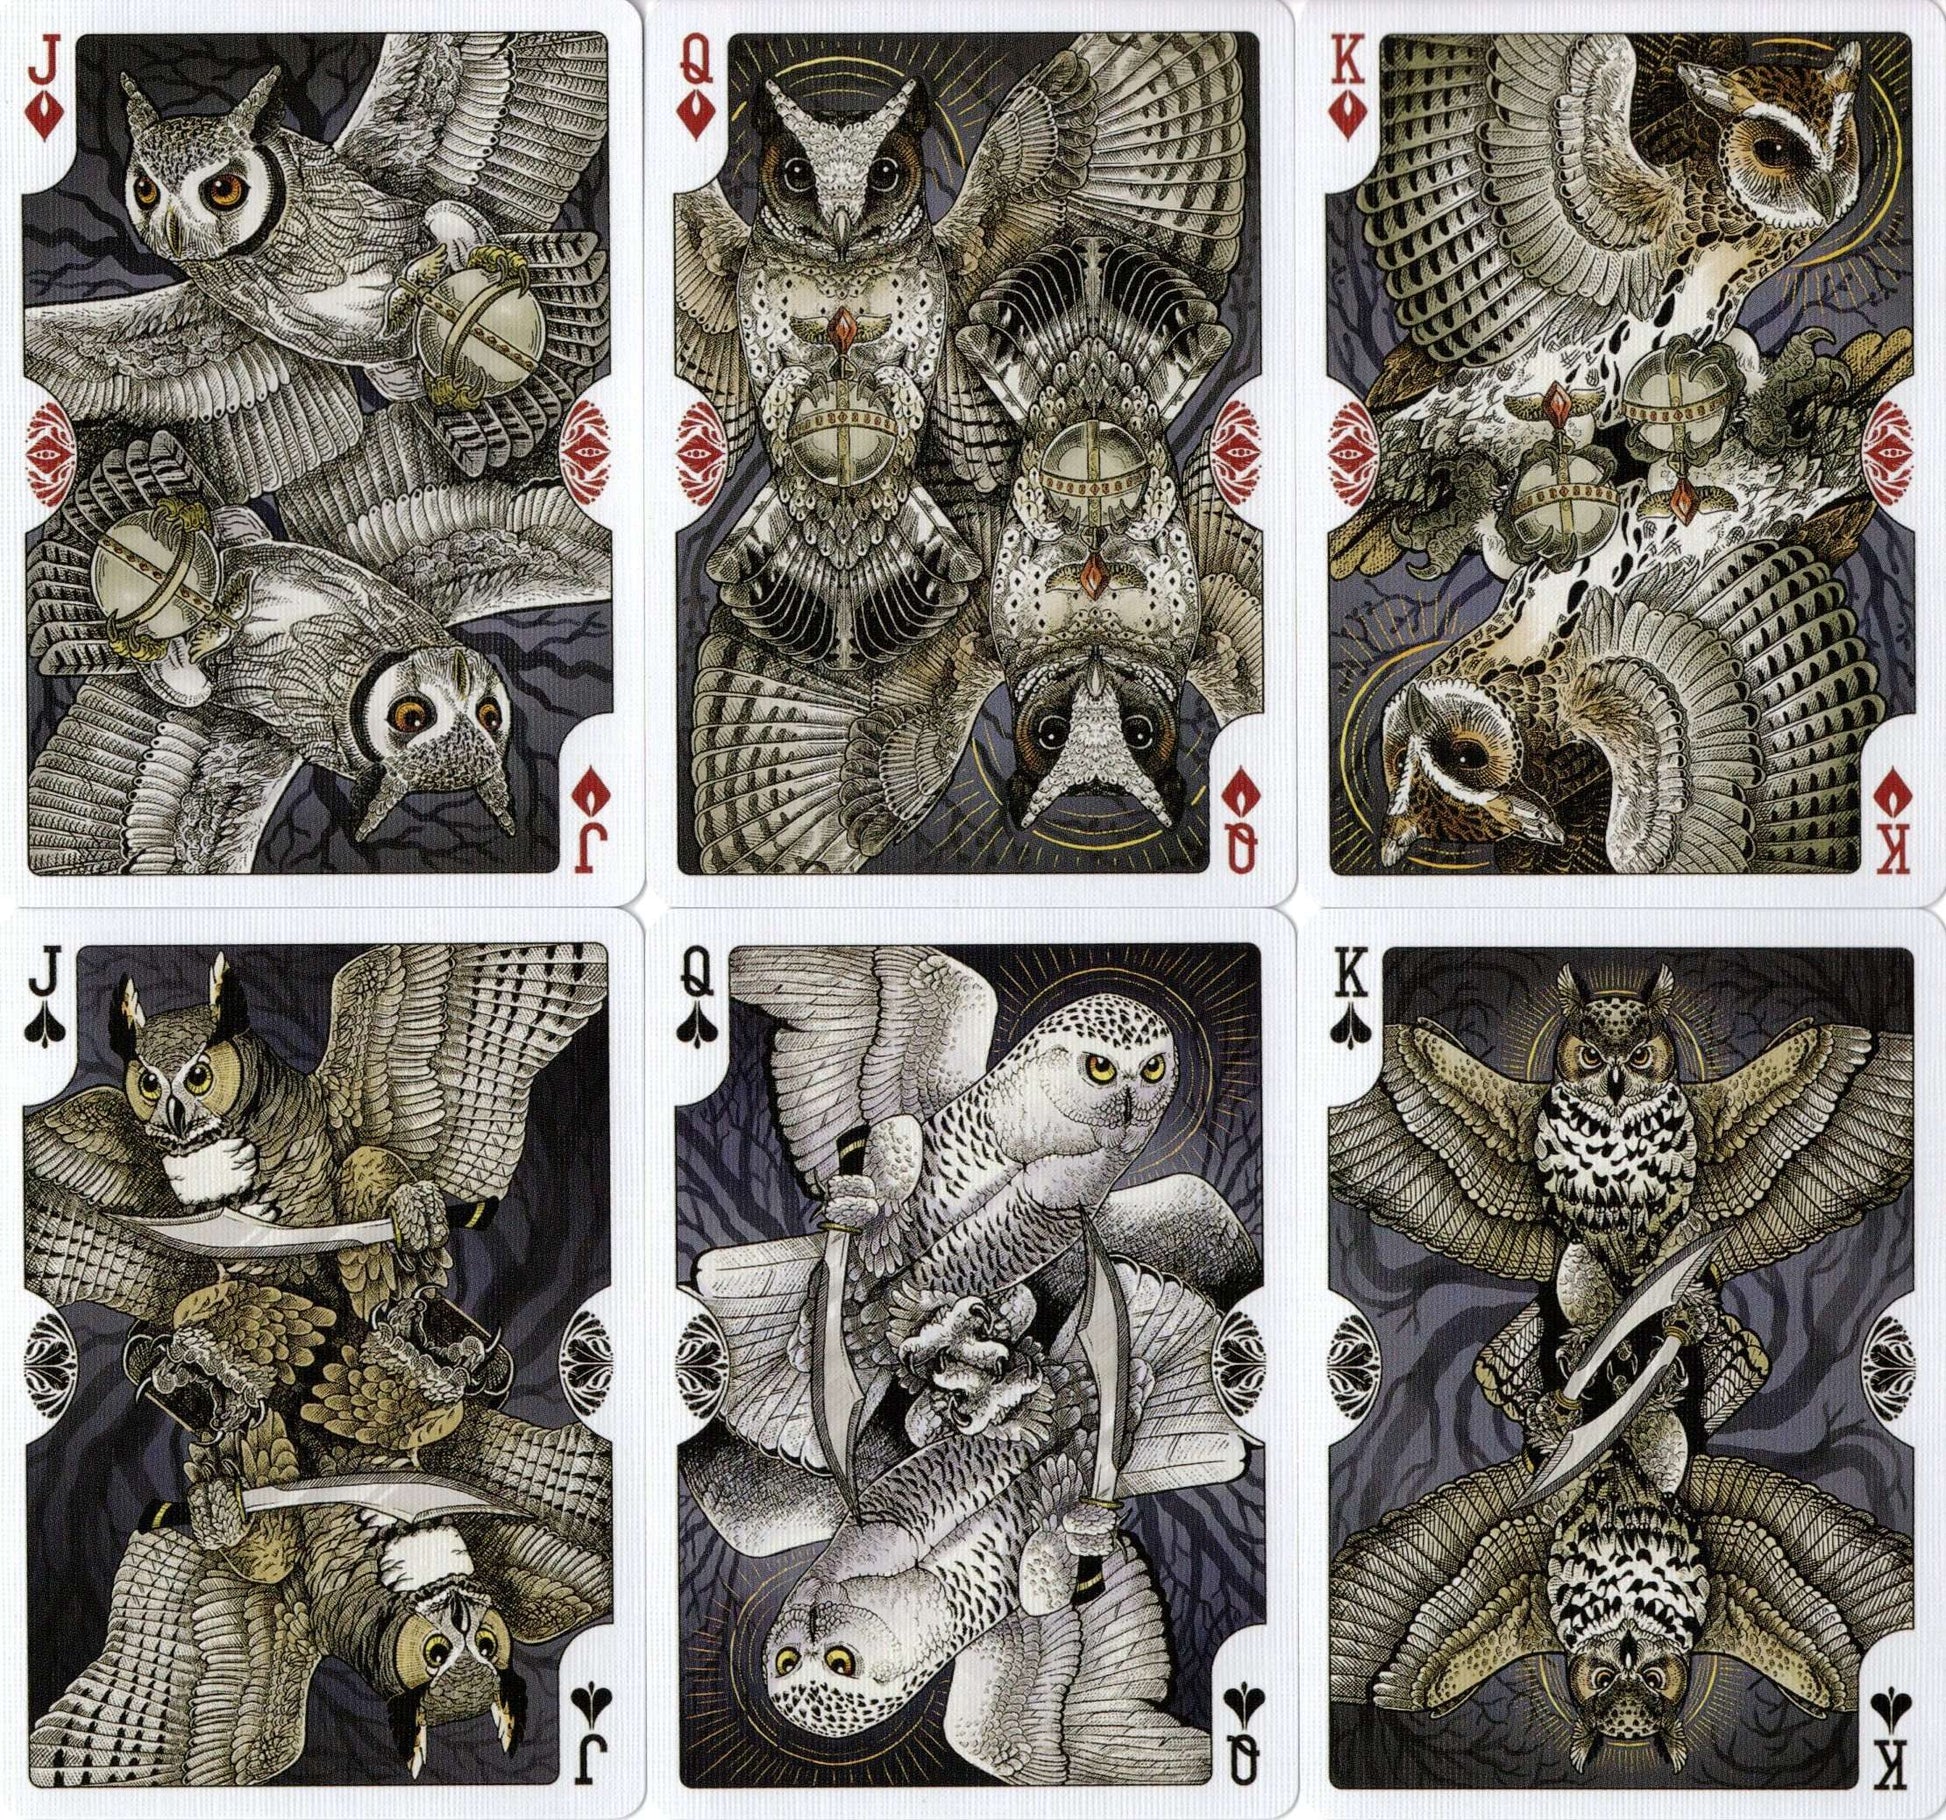 PlayingCardDecks.com-Strigiformes Owl Bicycle Playing Cards